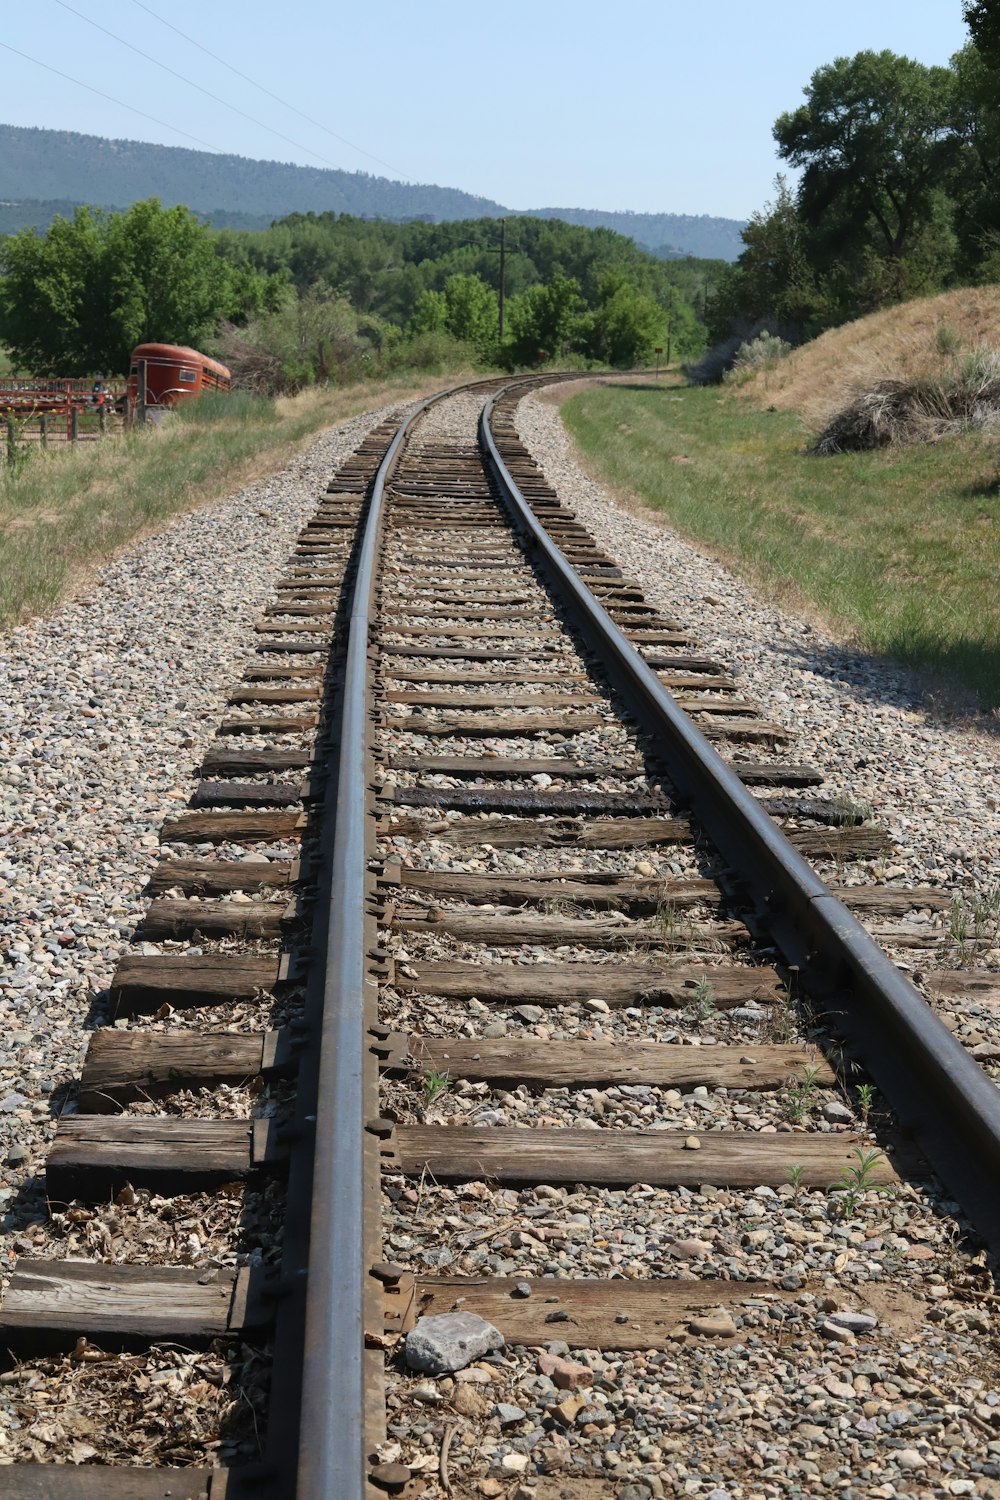 train rail tracks near green grass during daytime